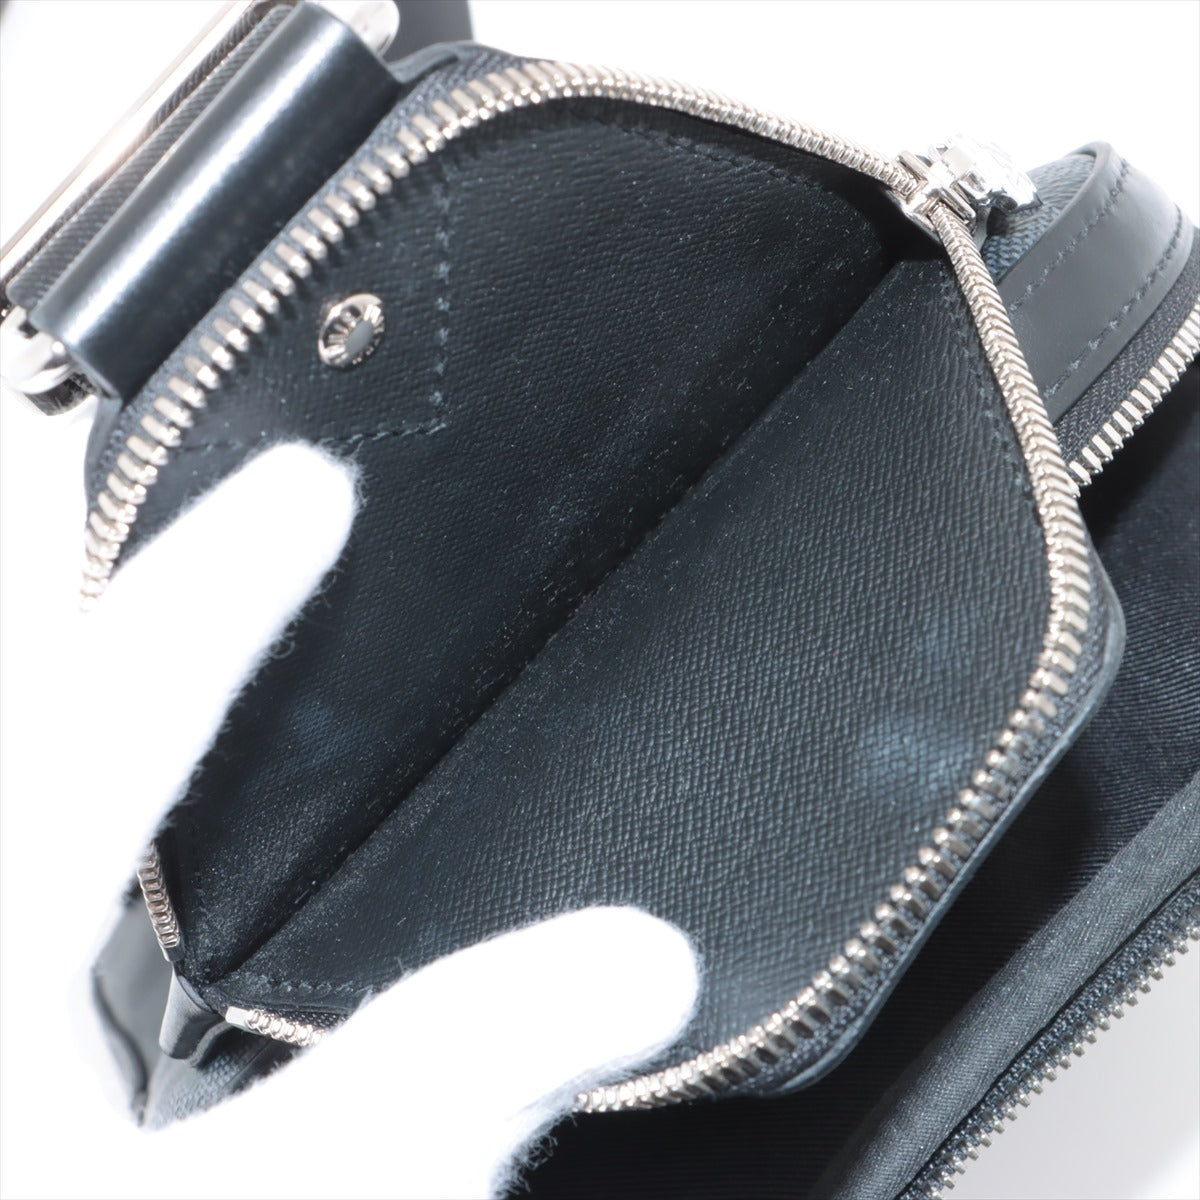 Louis Vuitton Damier Graphite Advance Ring Bag N45302